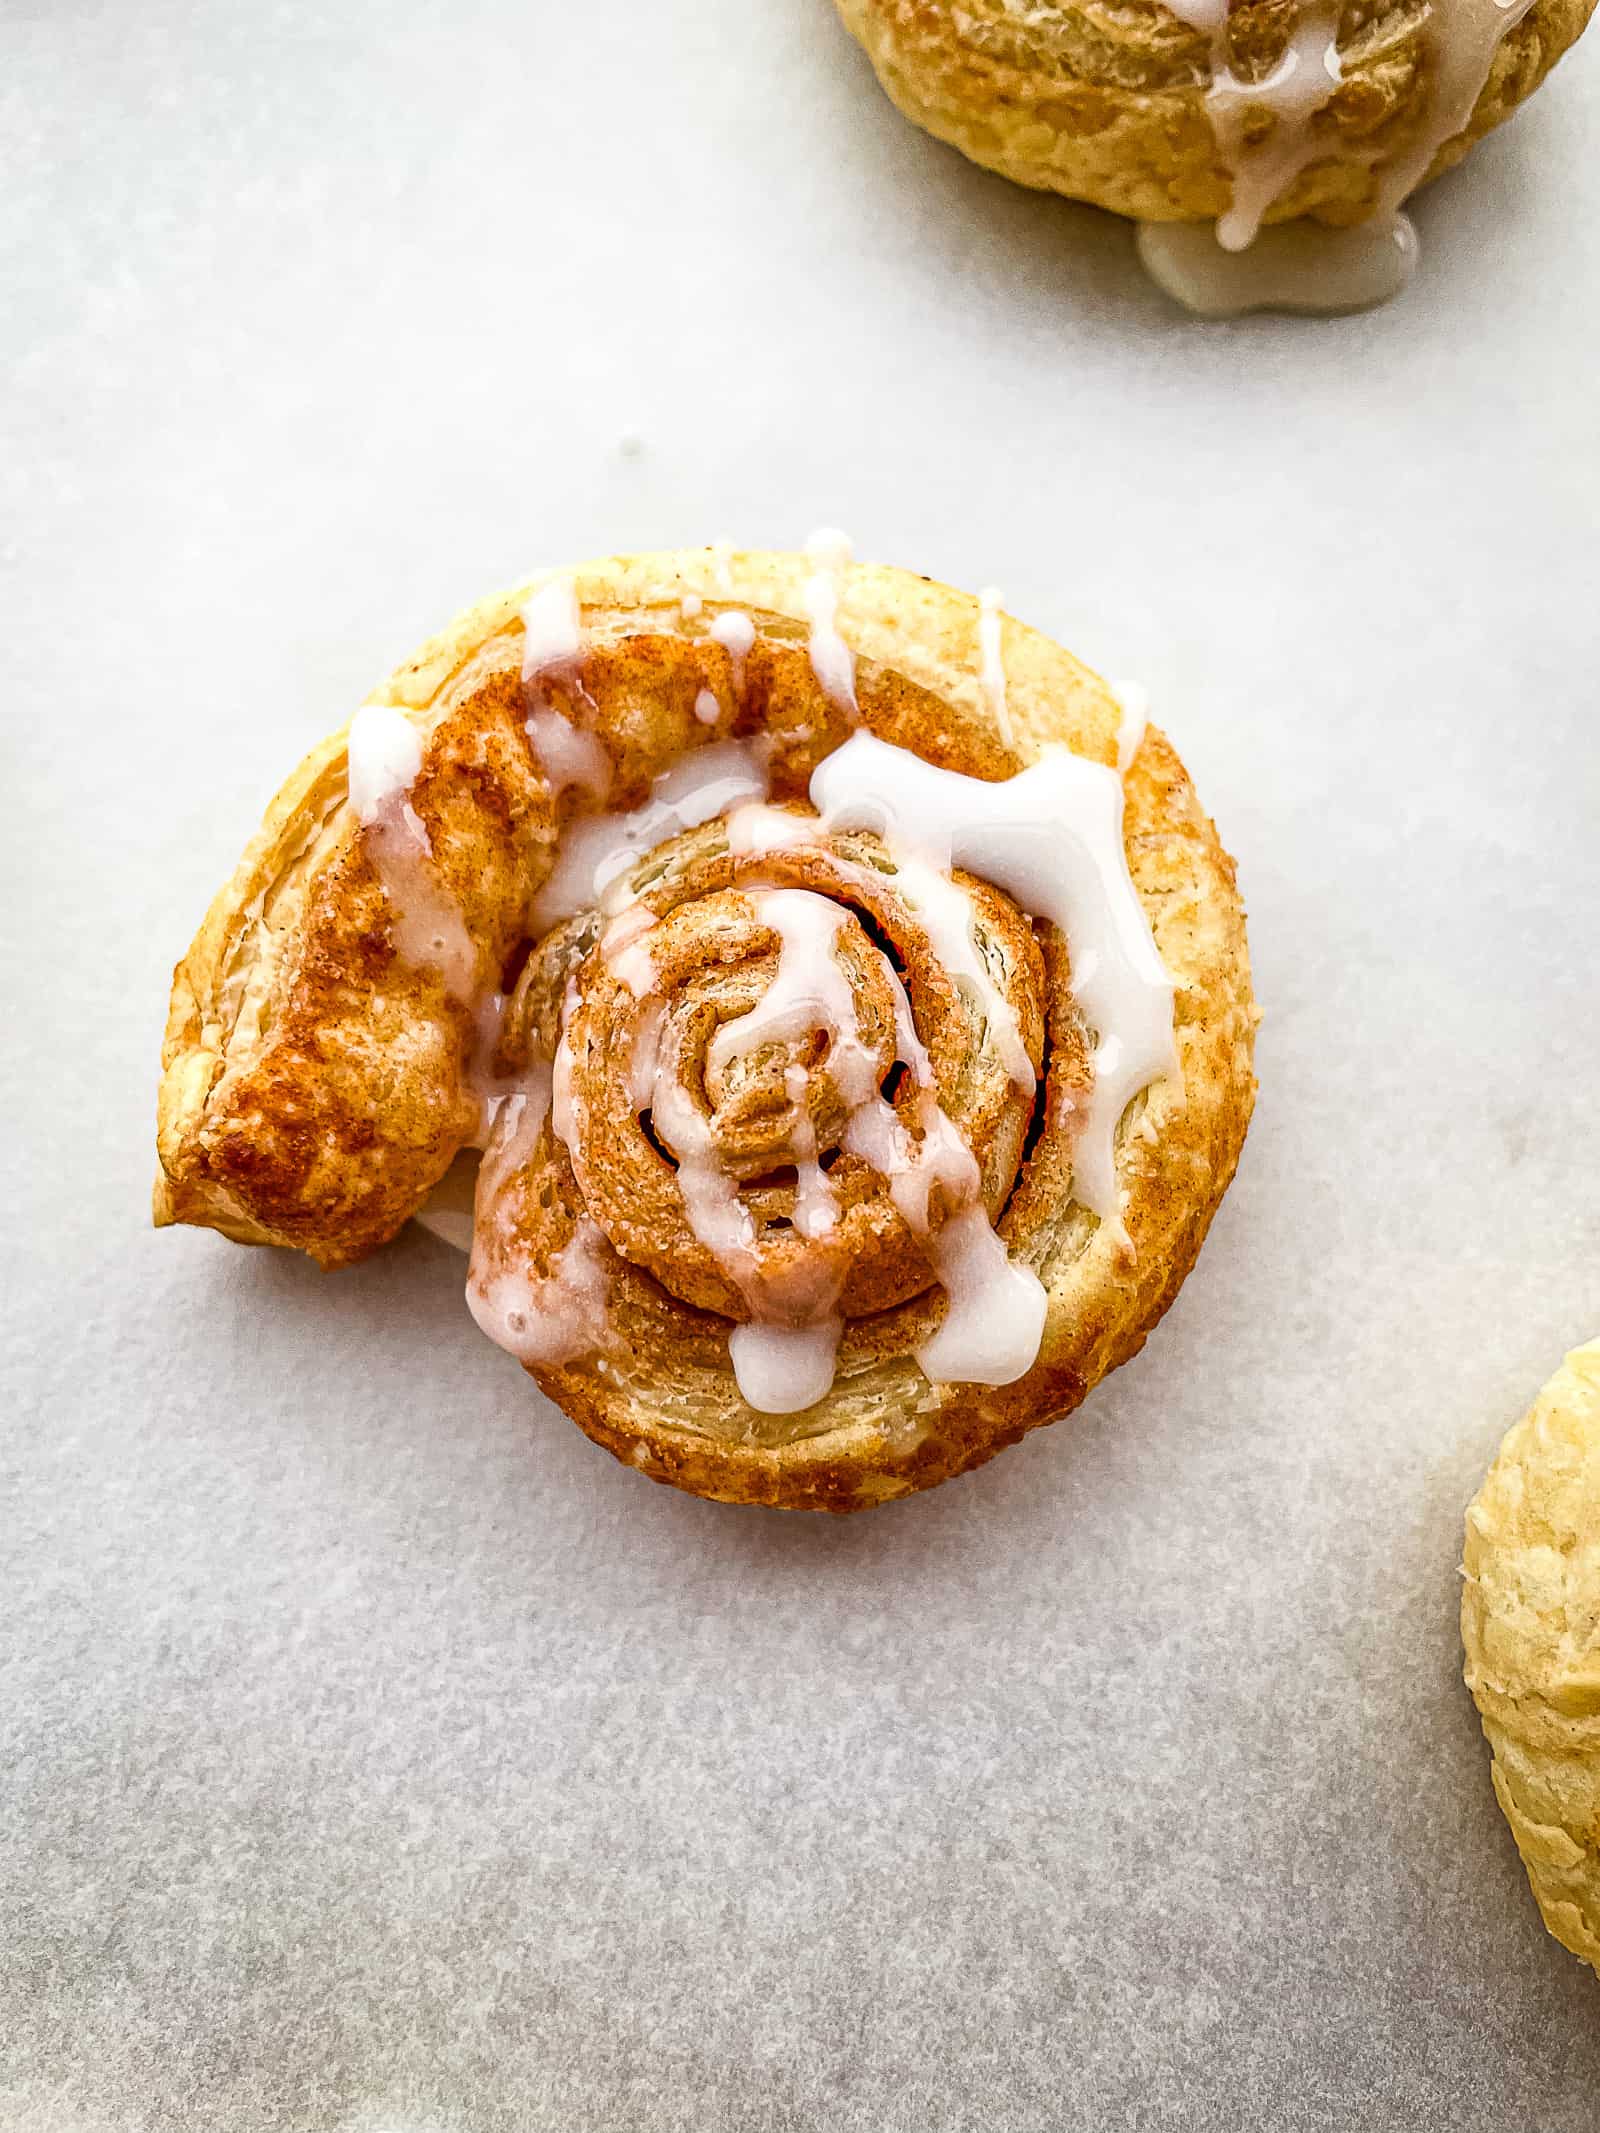 Puff pastry cinnamon roll with vanilla glaze.